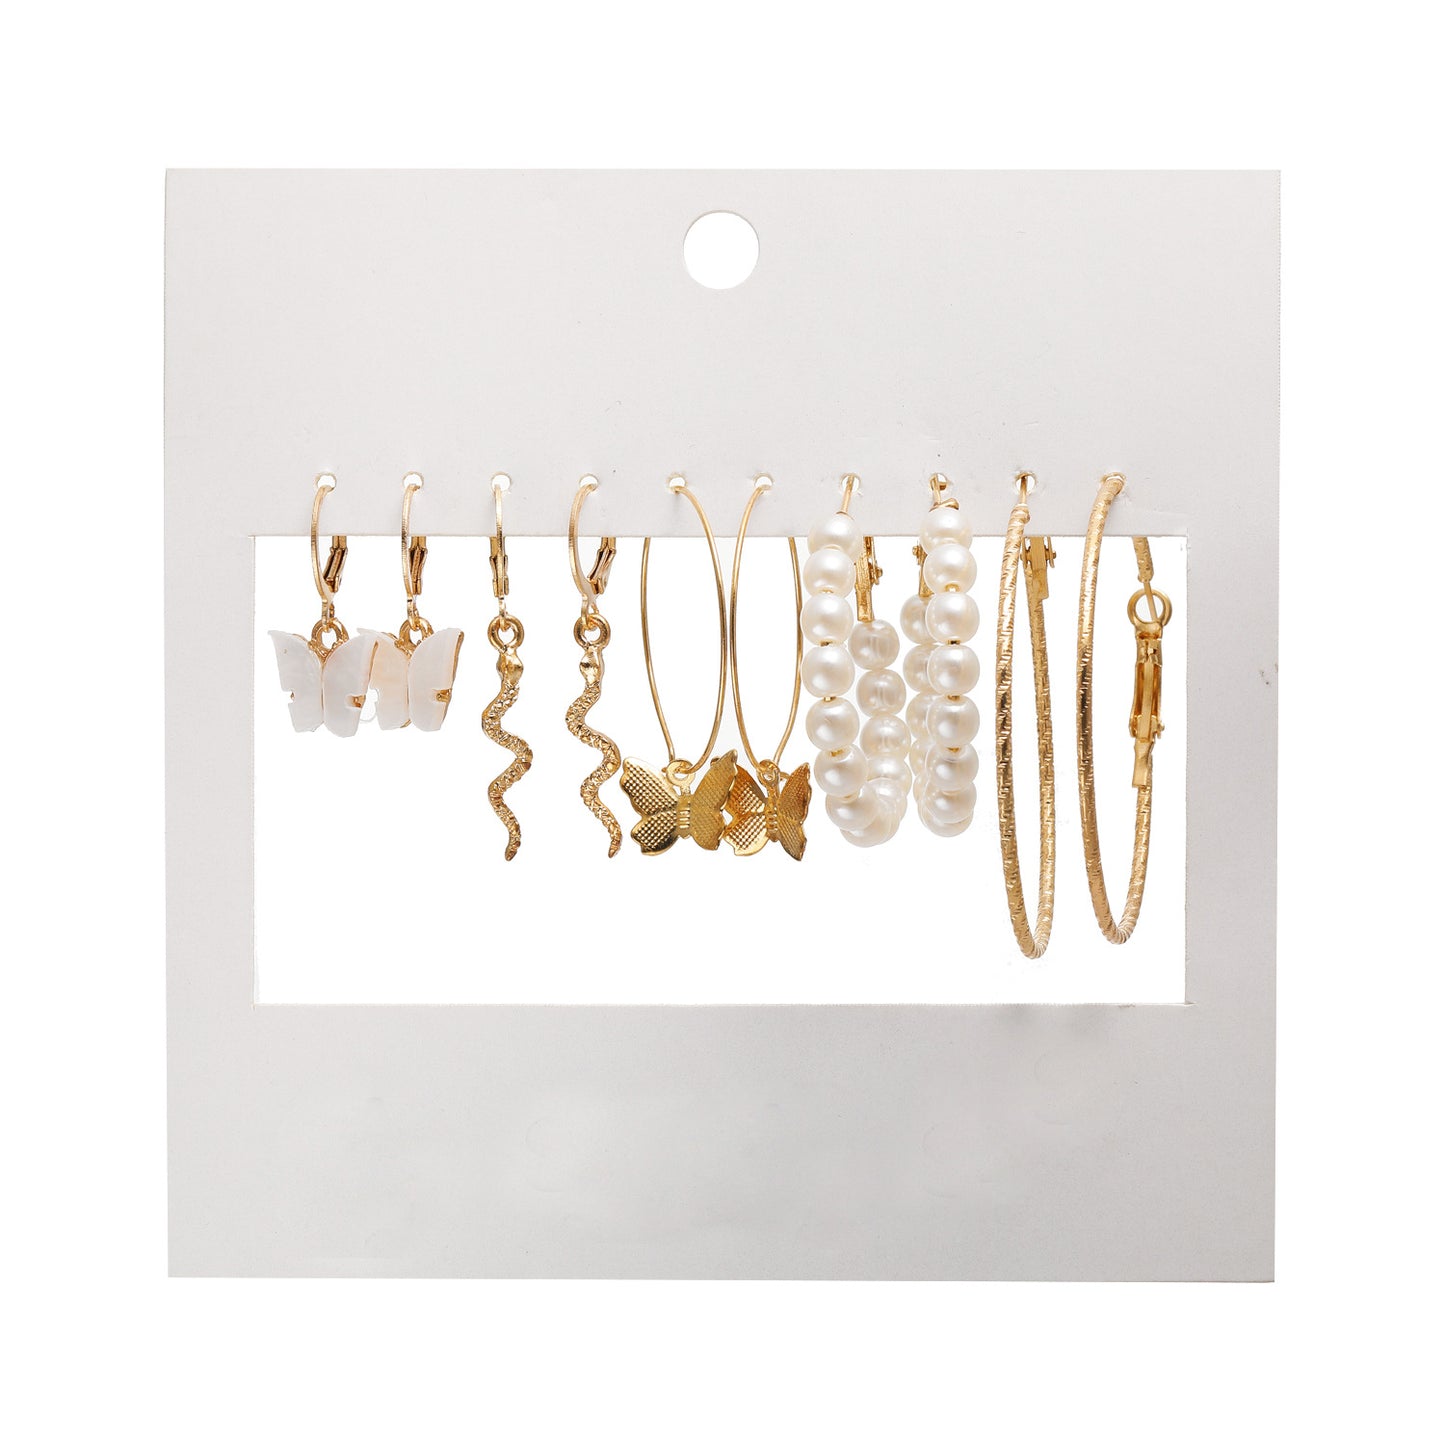 New Normcore Metal Earrings Suit 5 Pairs Of Creative Simple Gold Round Ring Earrings Inlaid Pearl Earrings